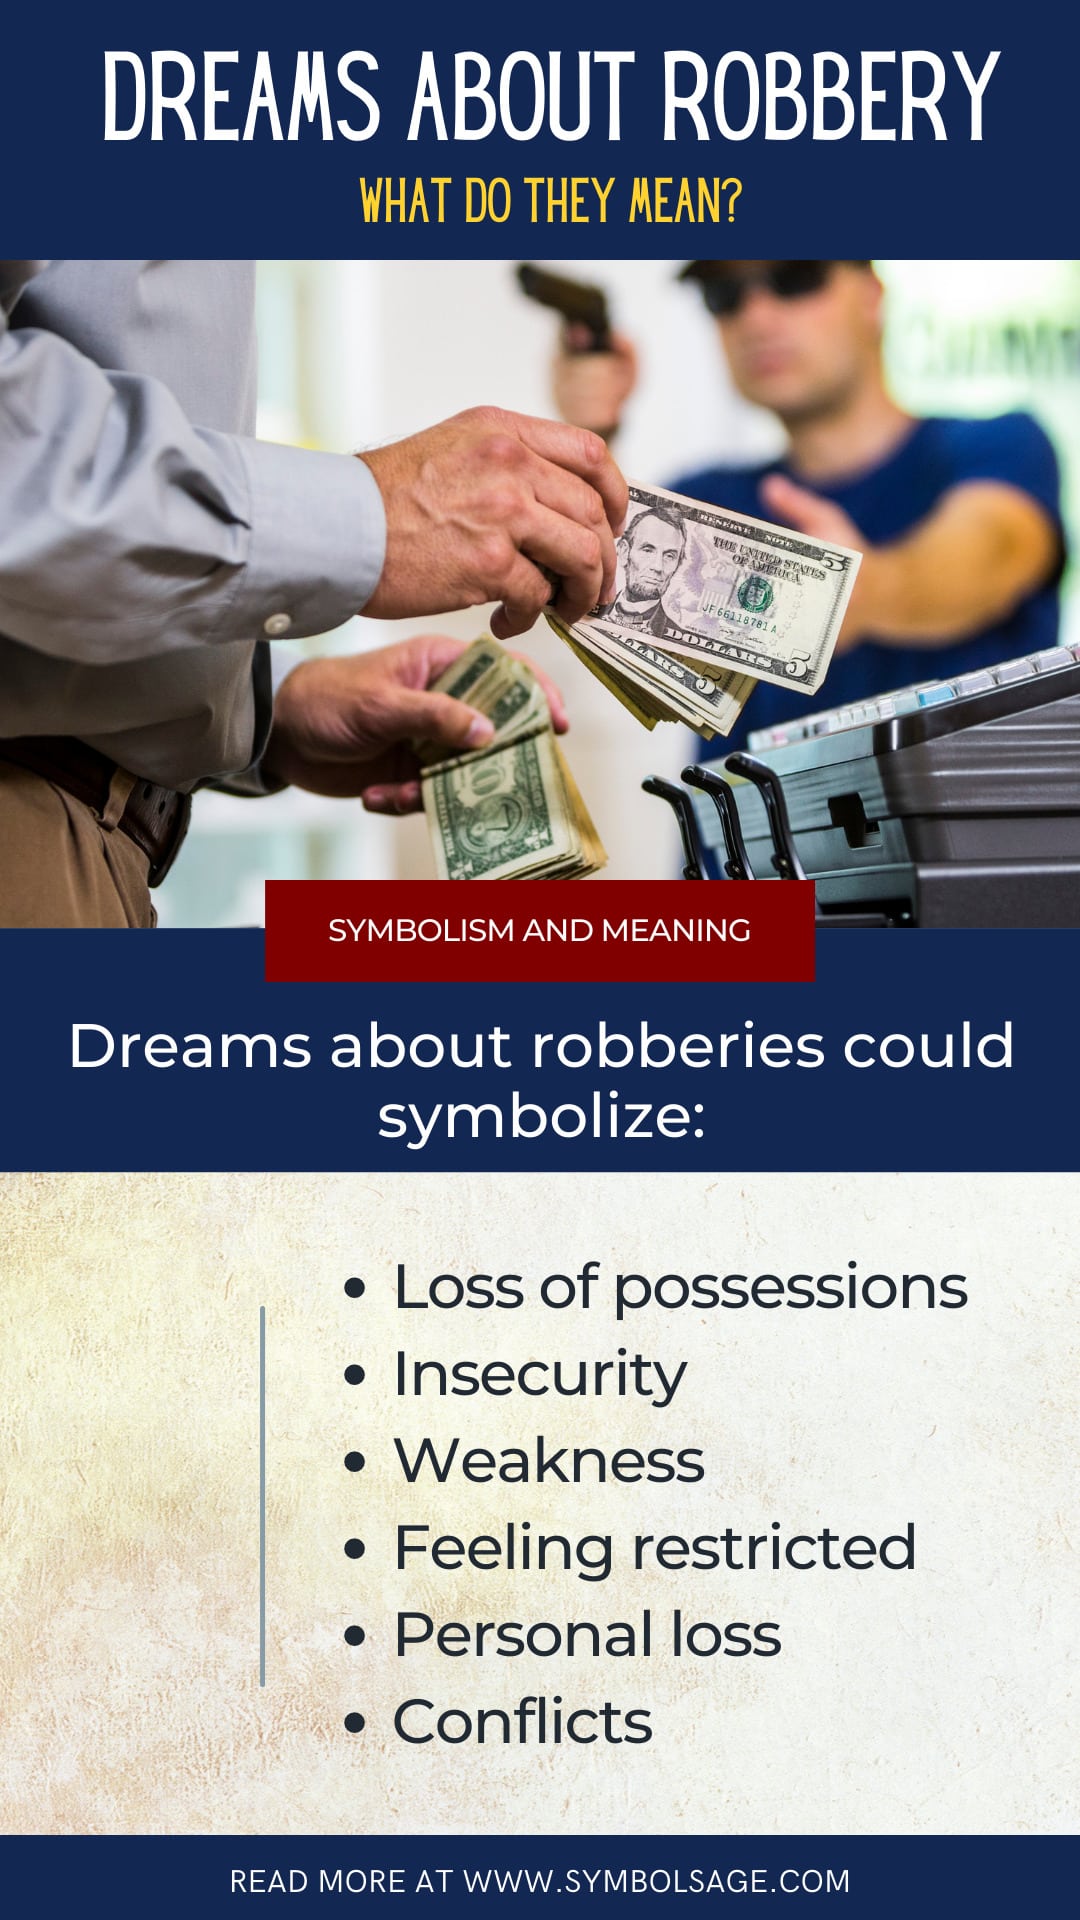 Symbolism of robbery dreams